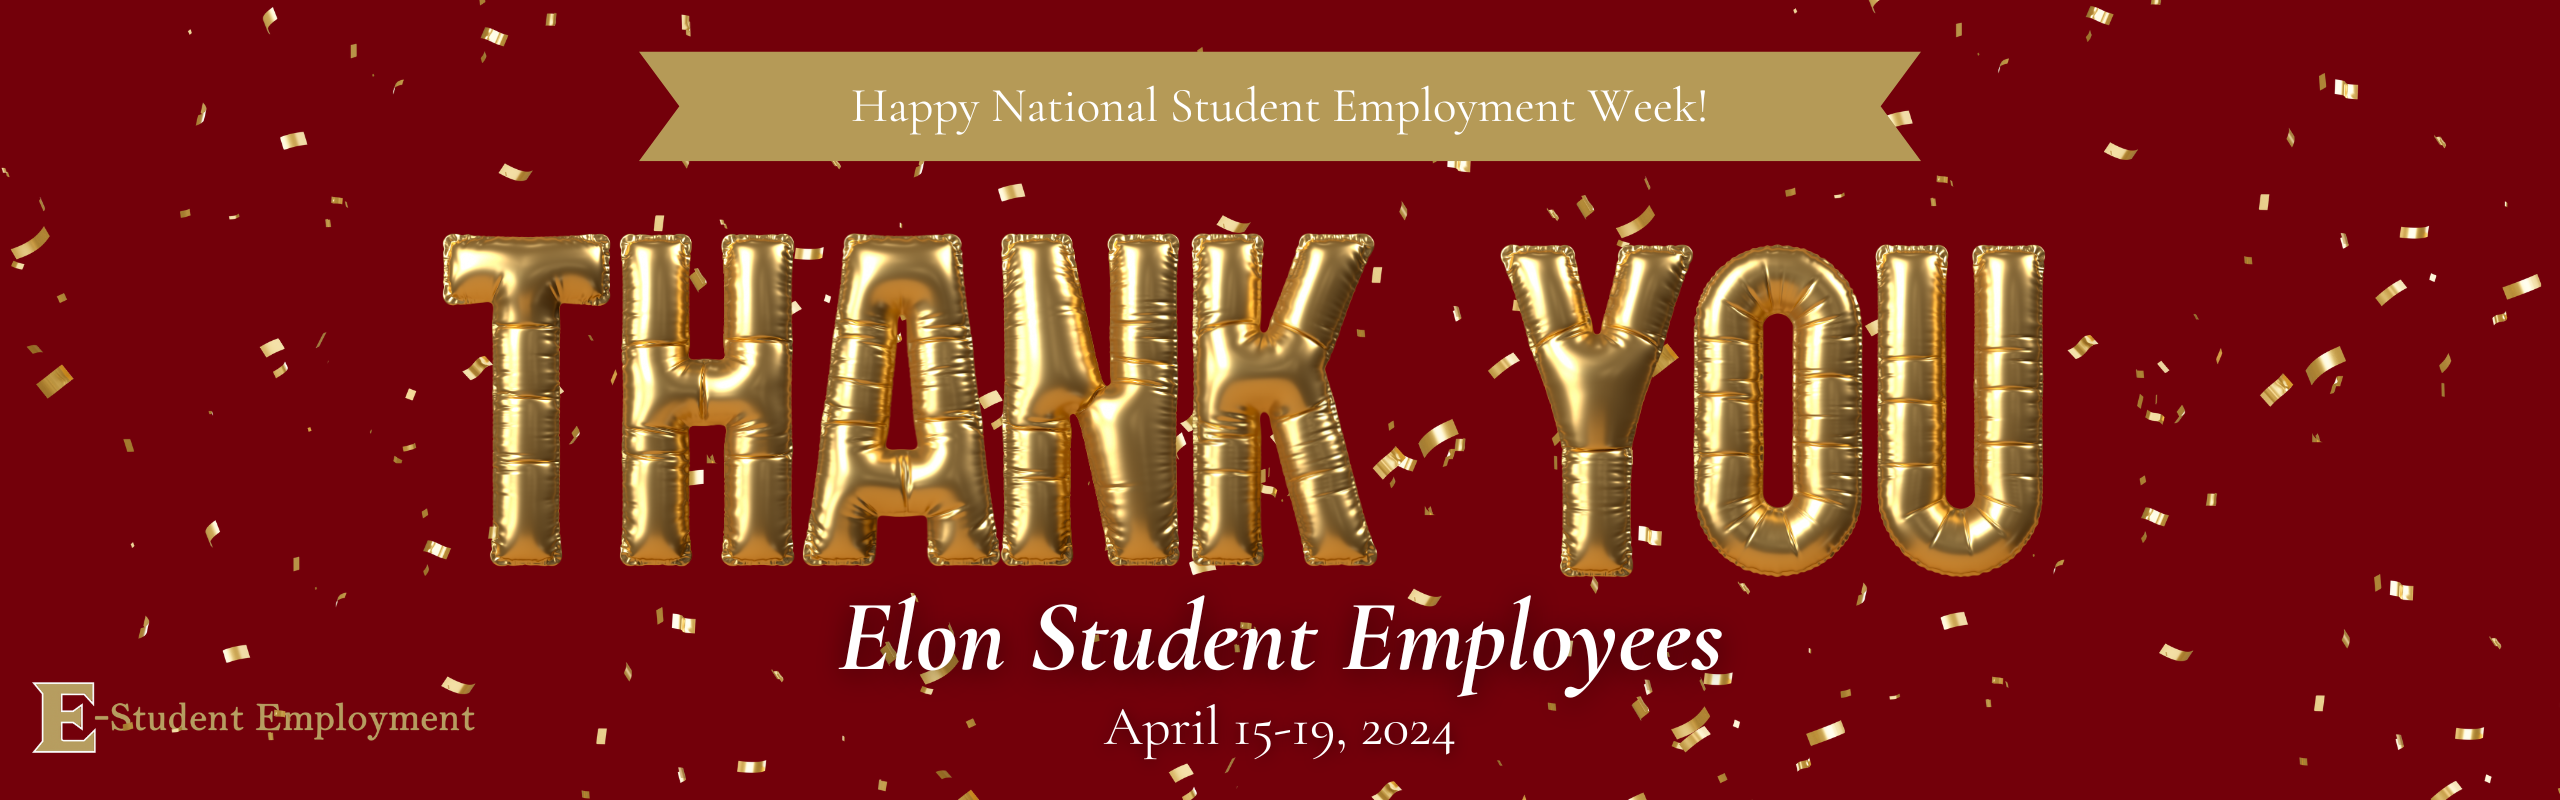 Happy Student Employment Week!